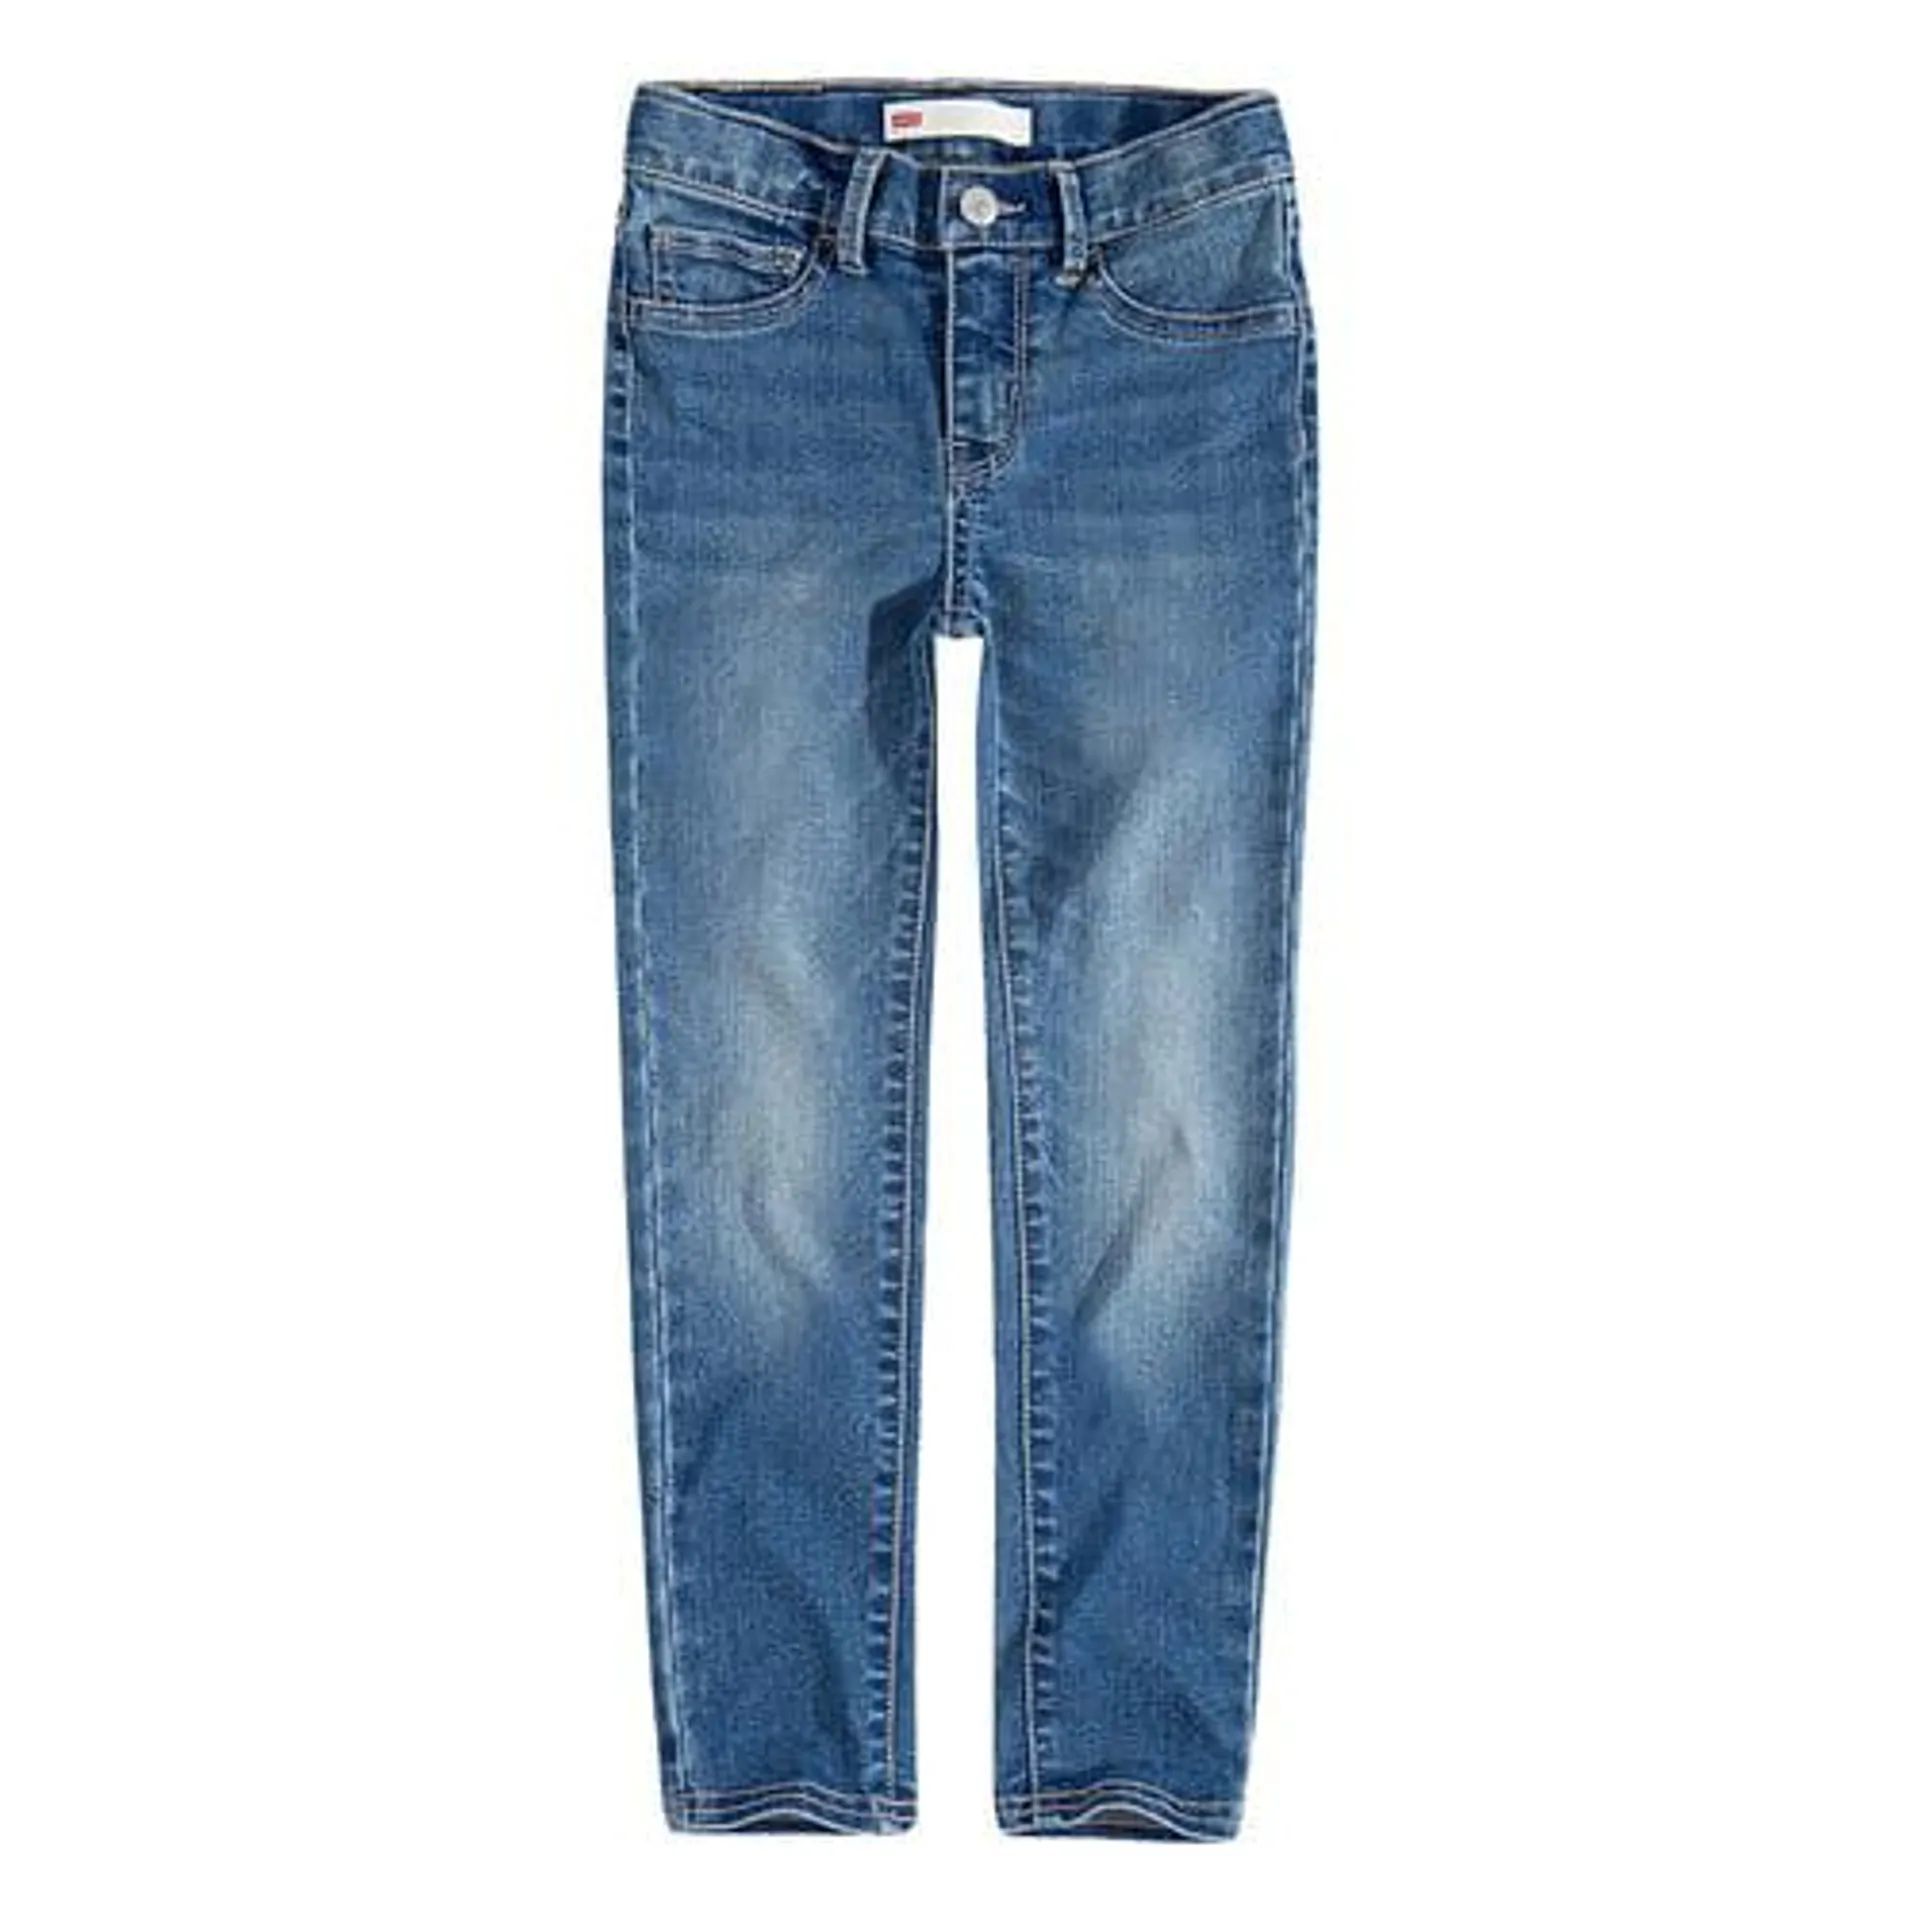 Jeans 710 Super skinny, 3 - 16 anos